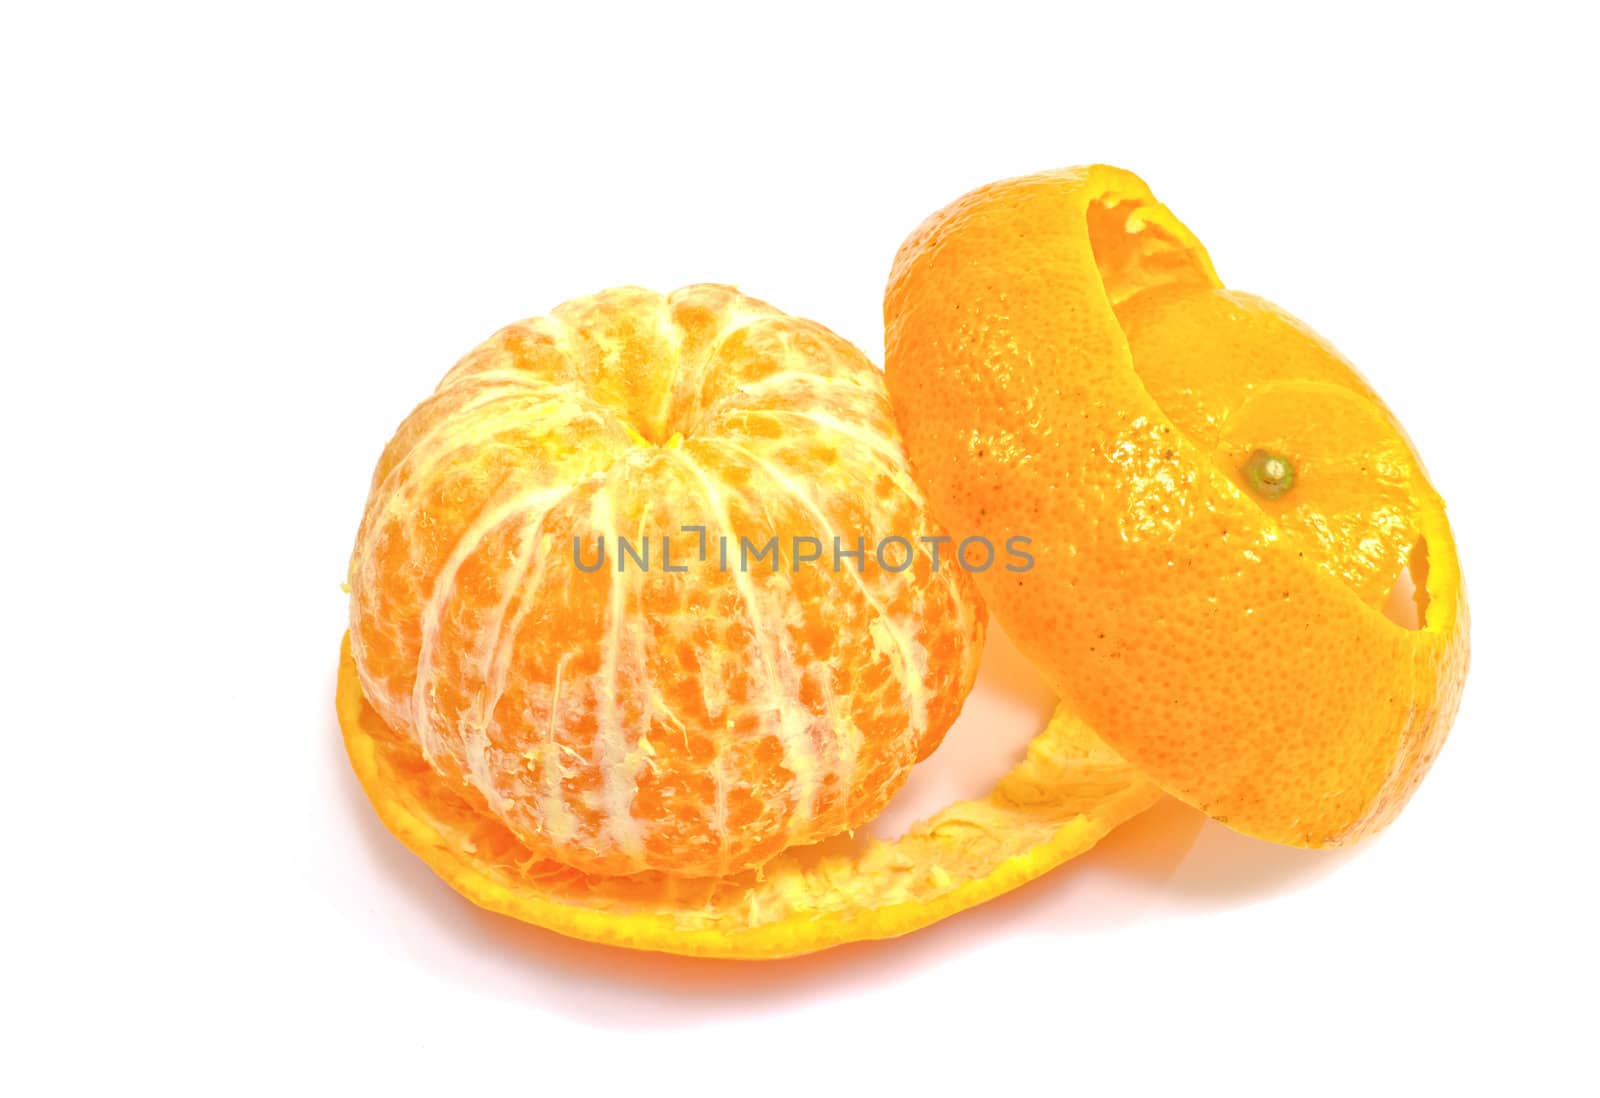 Peel of an orange isolated on white background